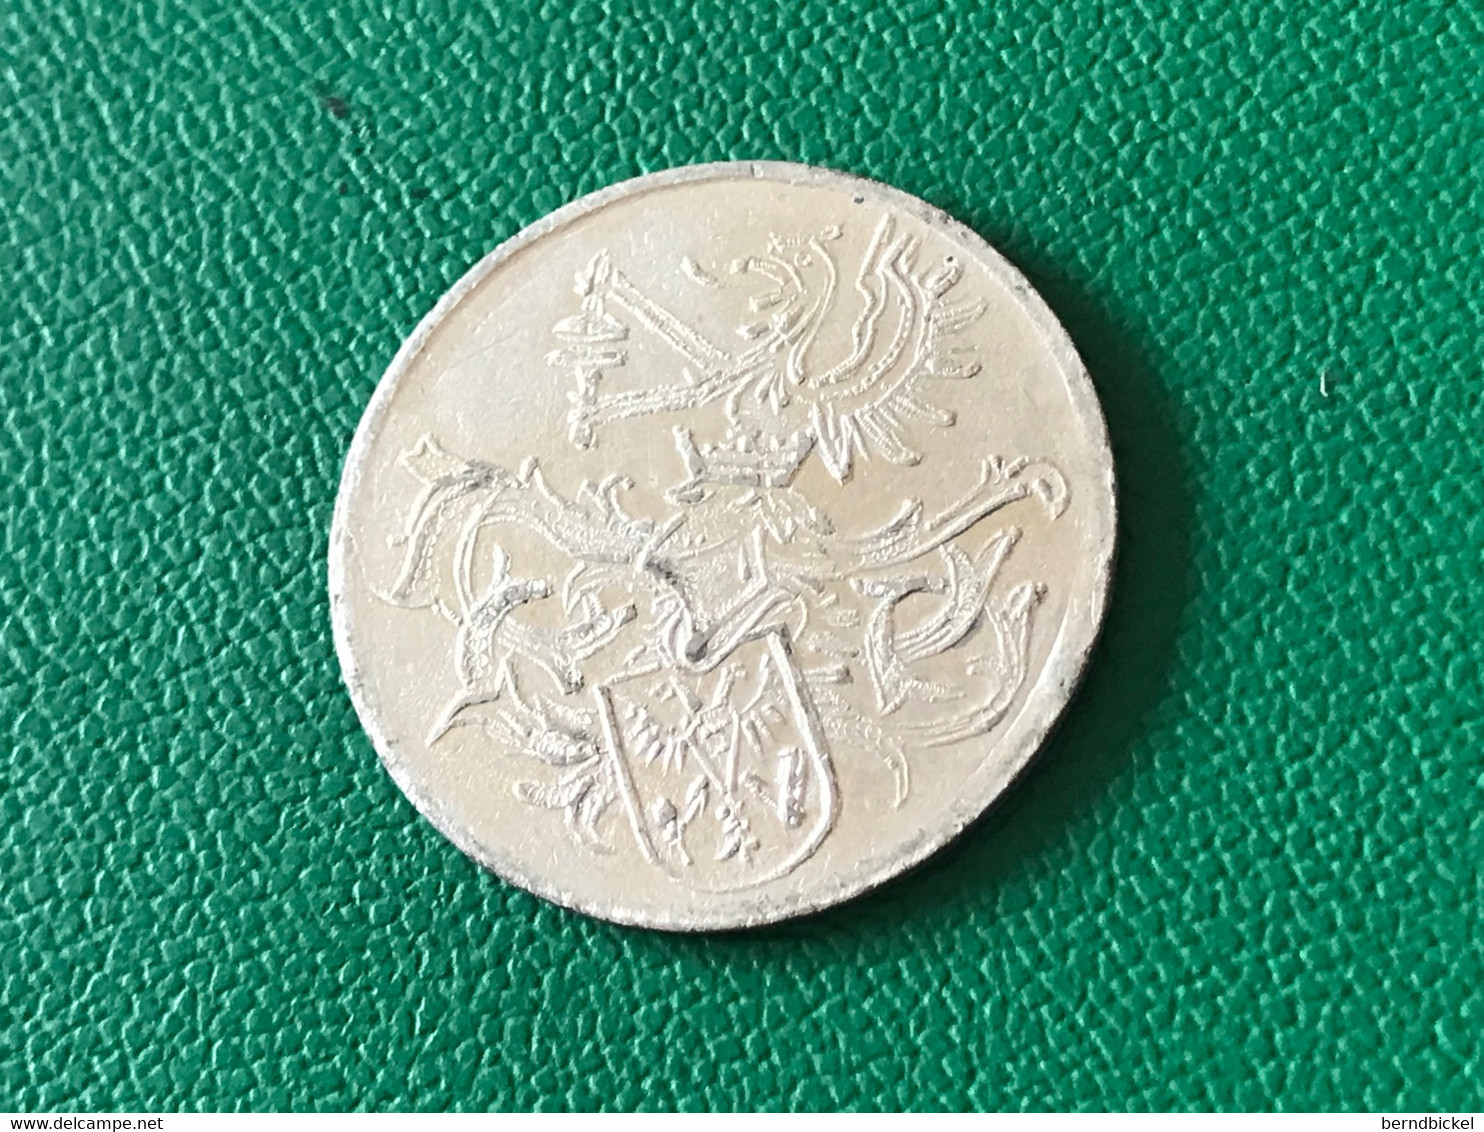 Münze Medaille West. Freilichtmuseum Hagen 1978 - Monedas Elongadas (elongated Coins)